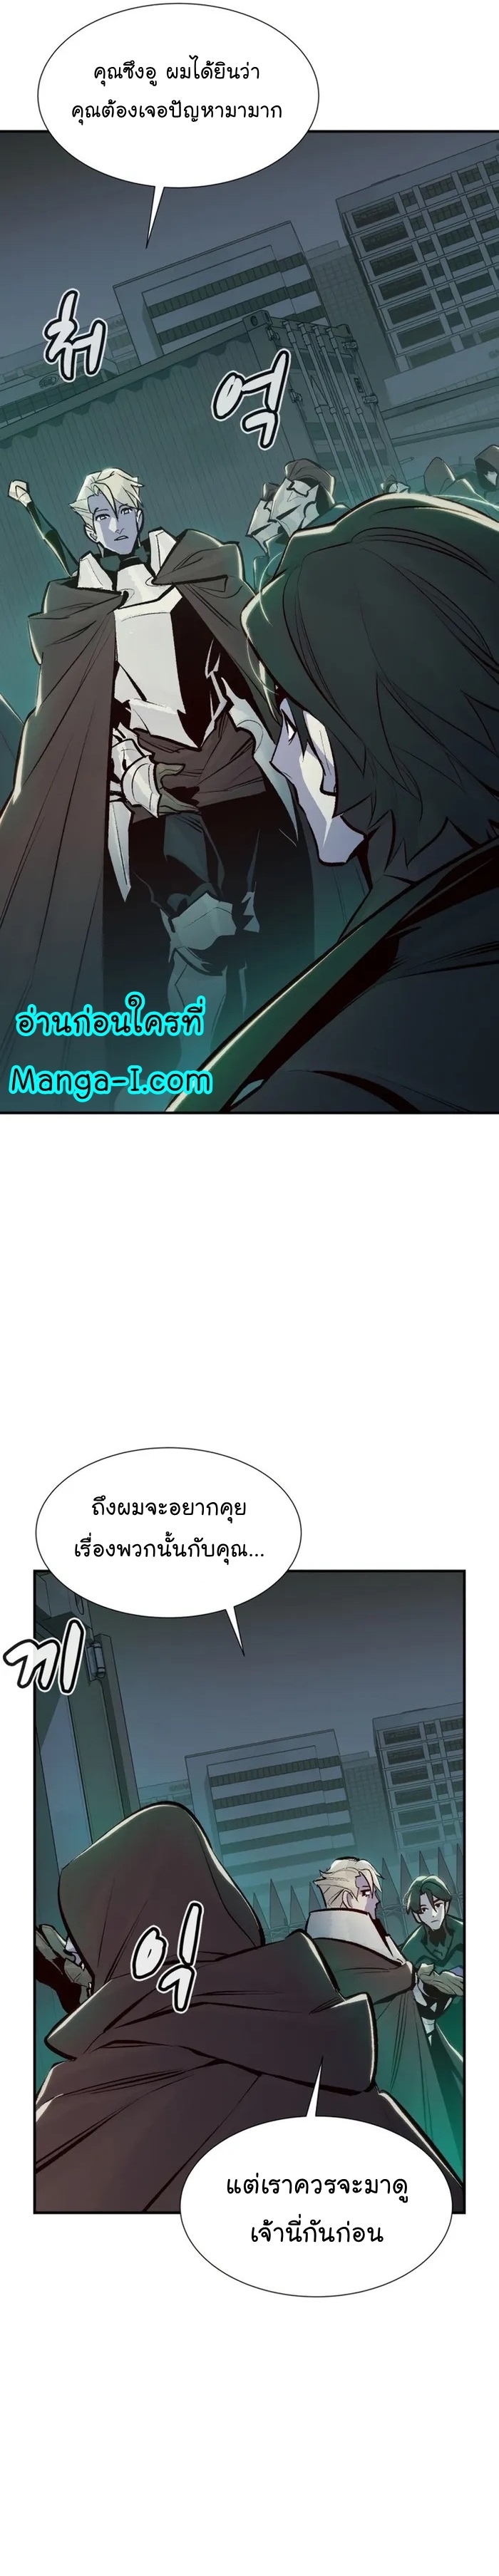 Manga Manwha I The Lone Necromancer 100 (8)